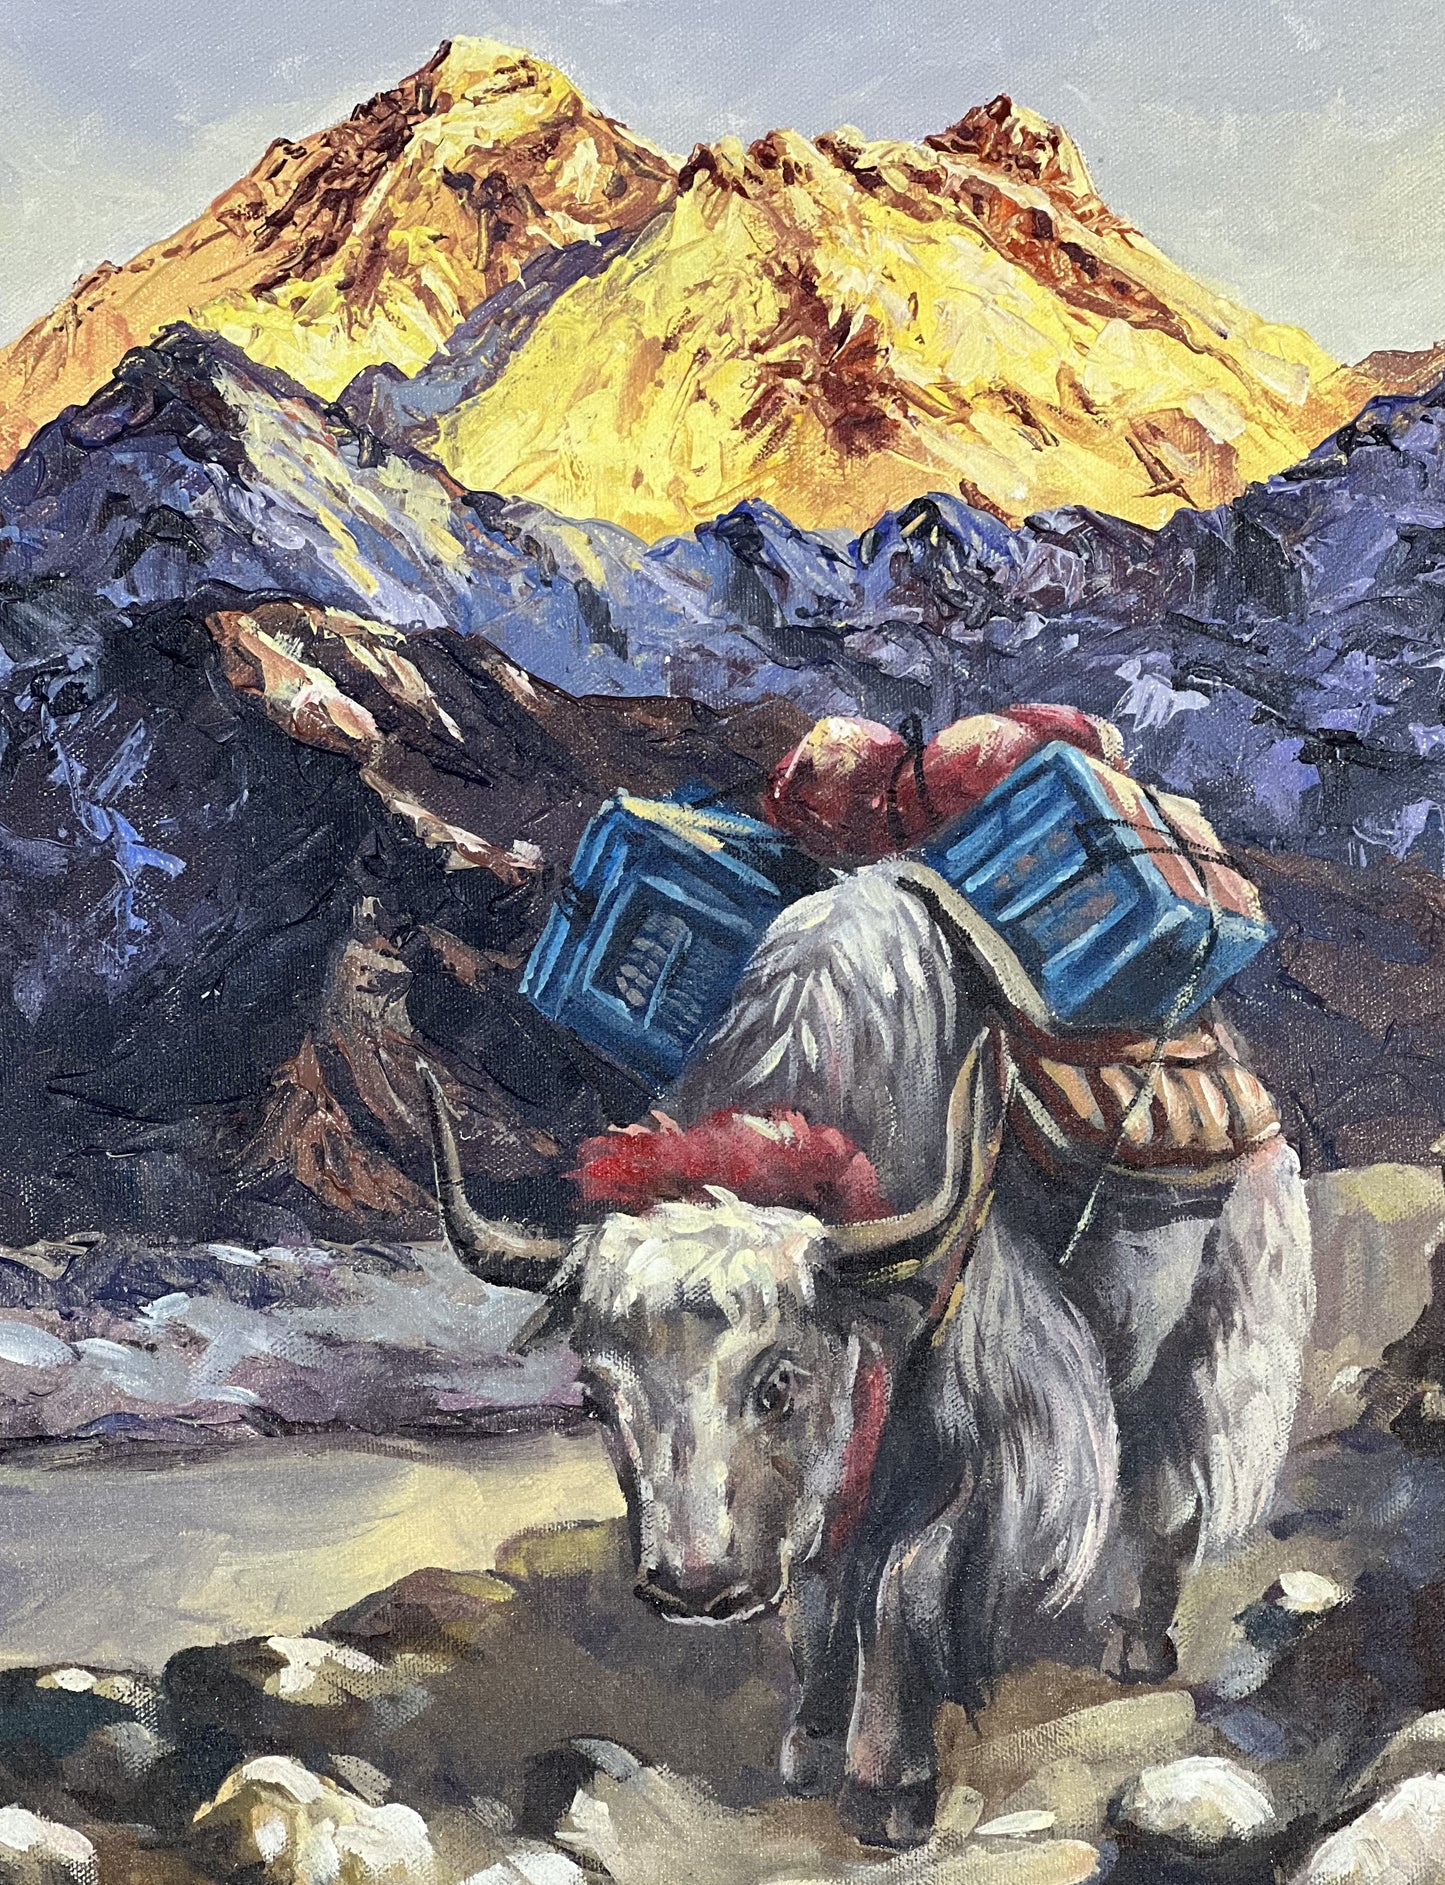 Mount Everest Nepal Himalaya / Acrylic Landscape Painting On Canvas/ High Quality Palette Knife Painting